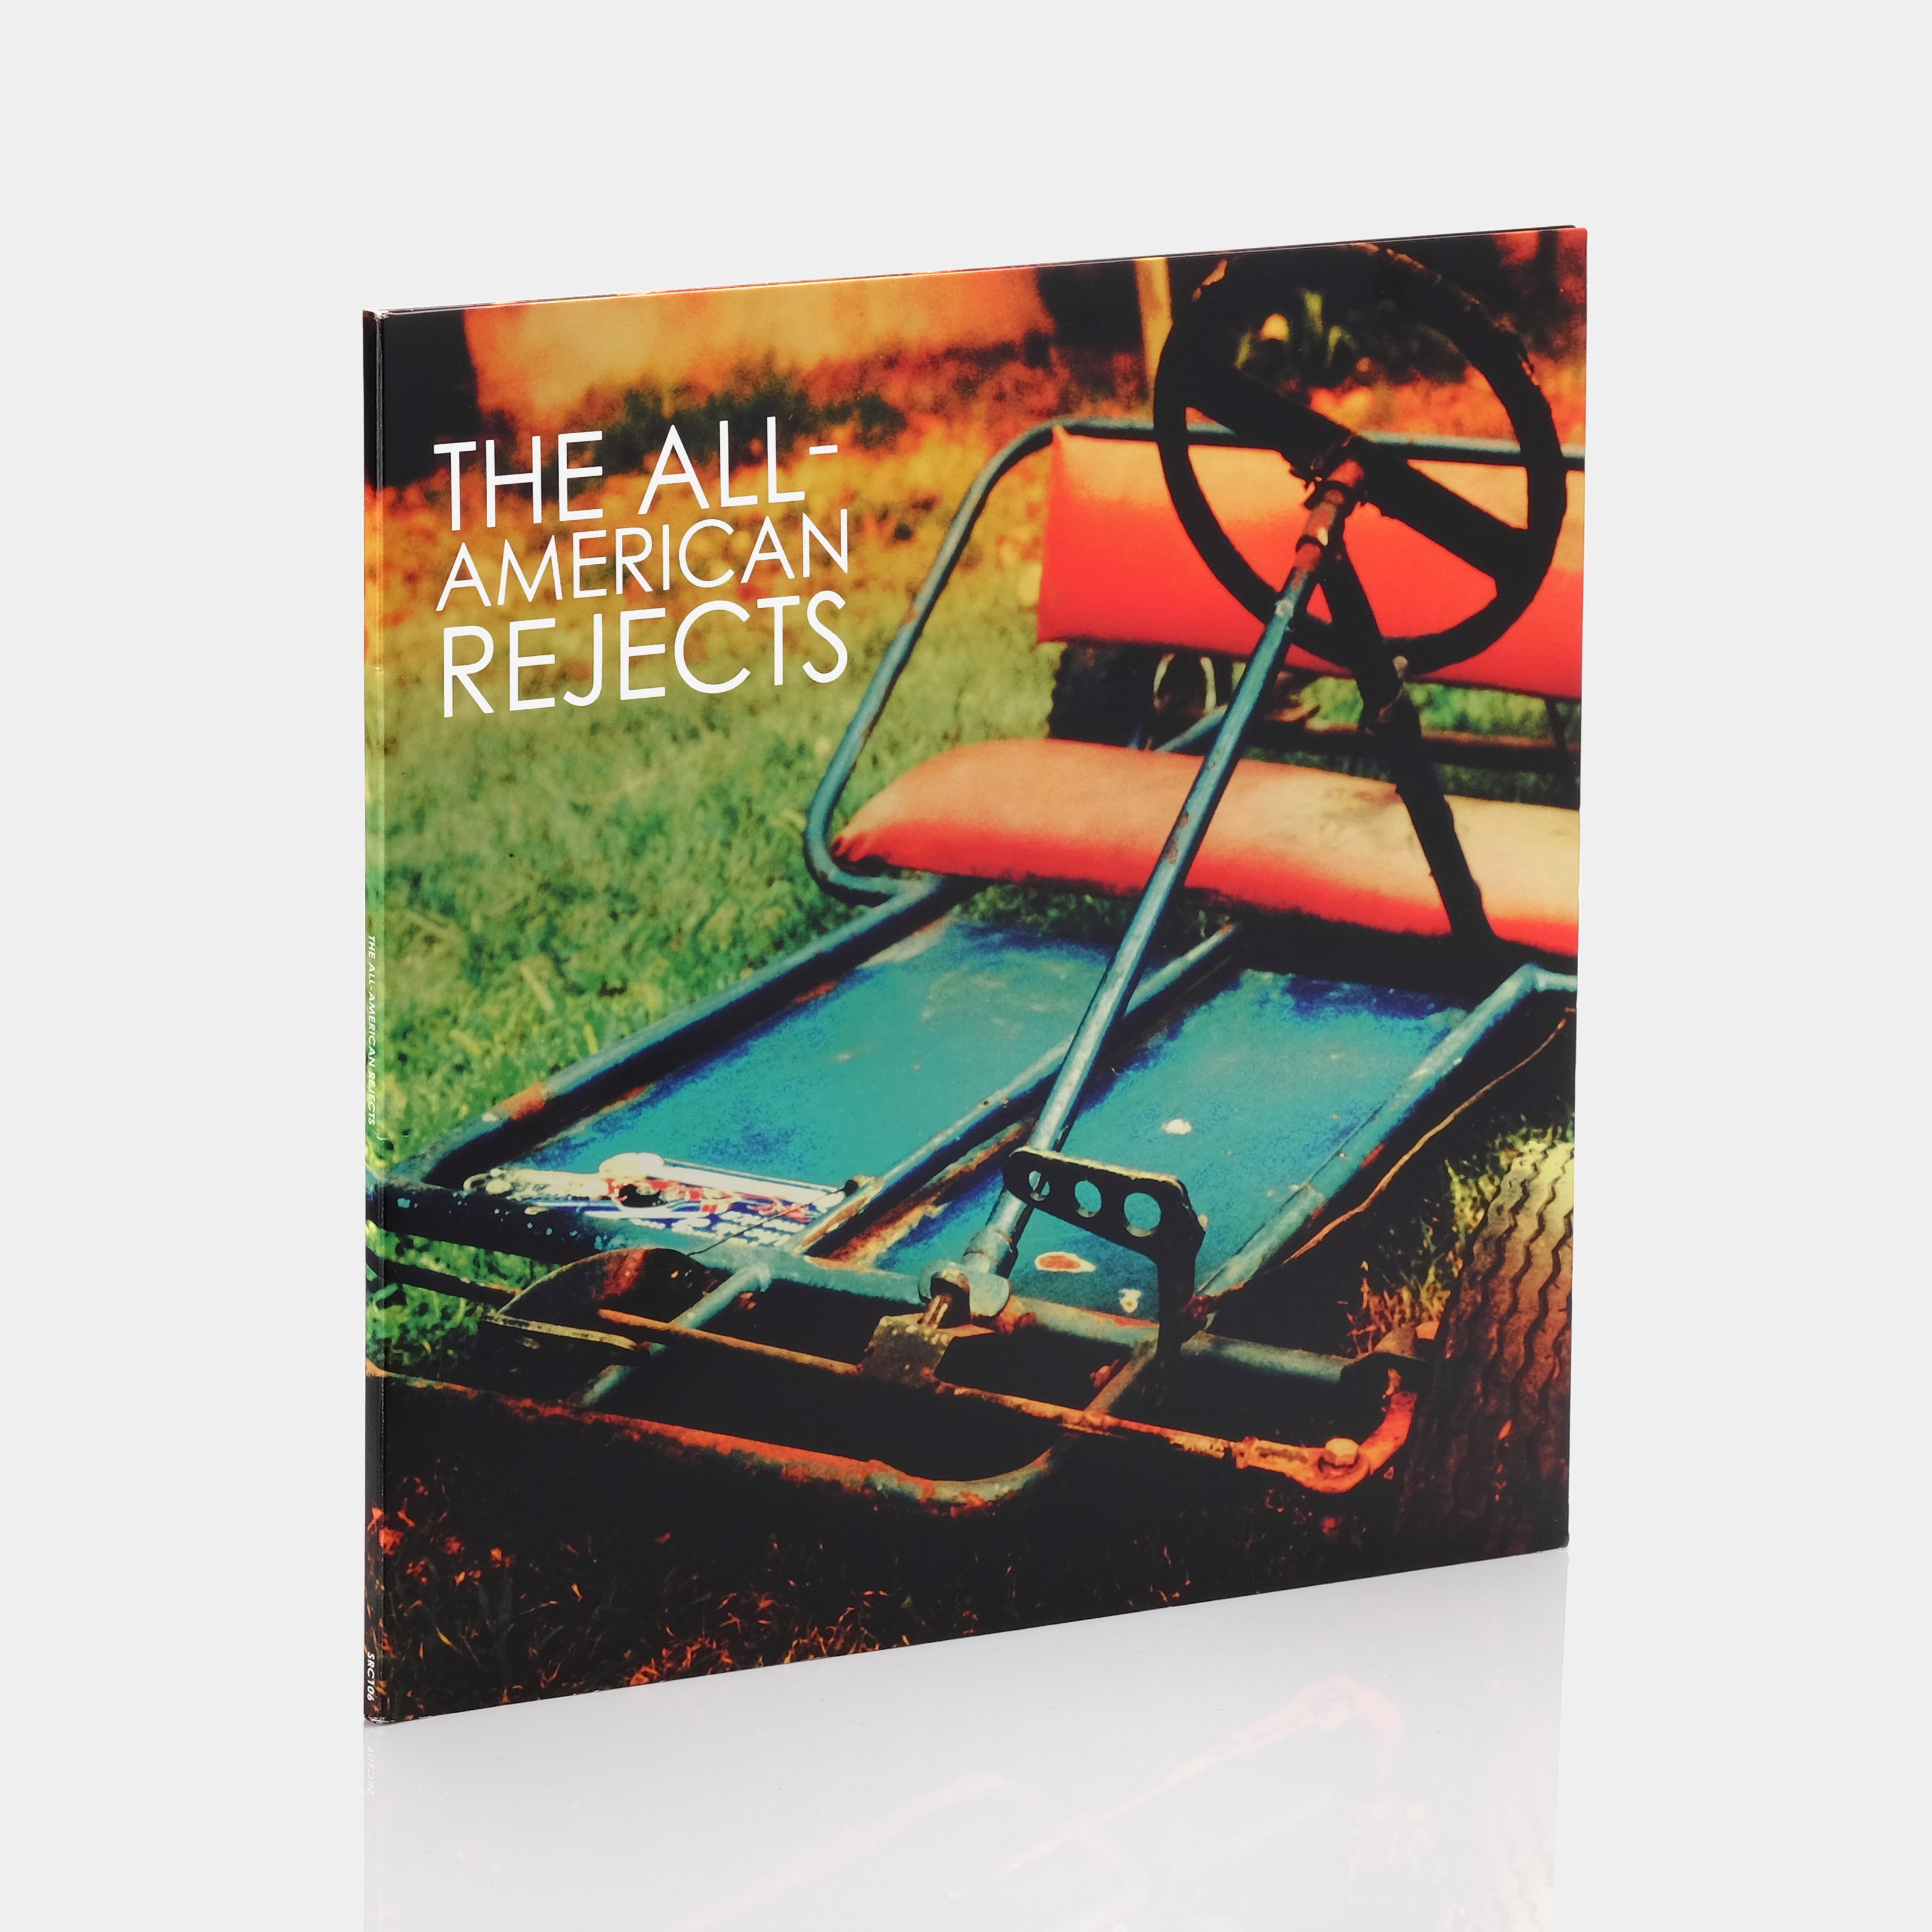 The All-American Rejects - The All American Rejects LP Pink Vinyl Record + 7" White Single